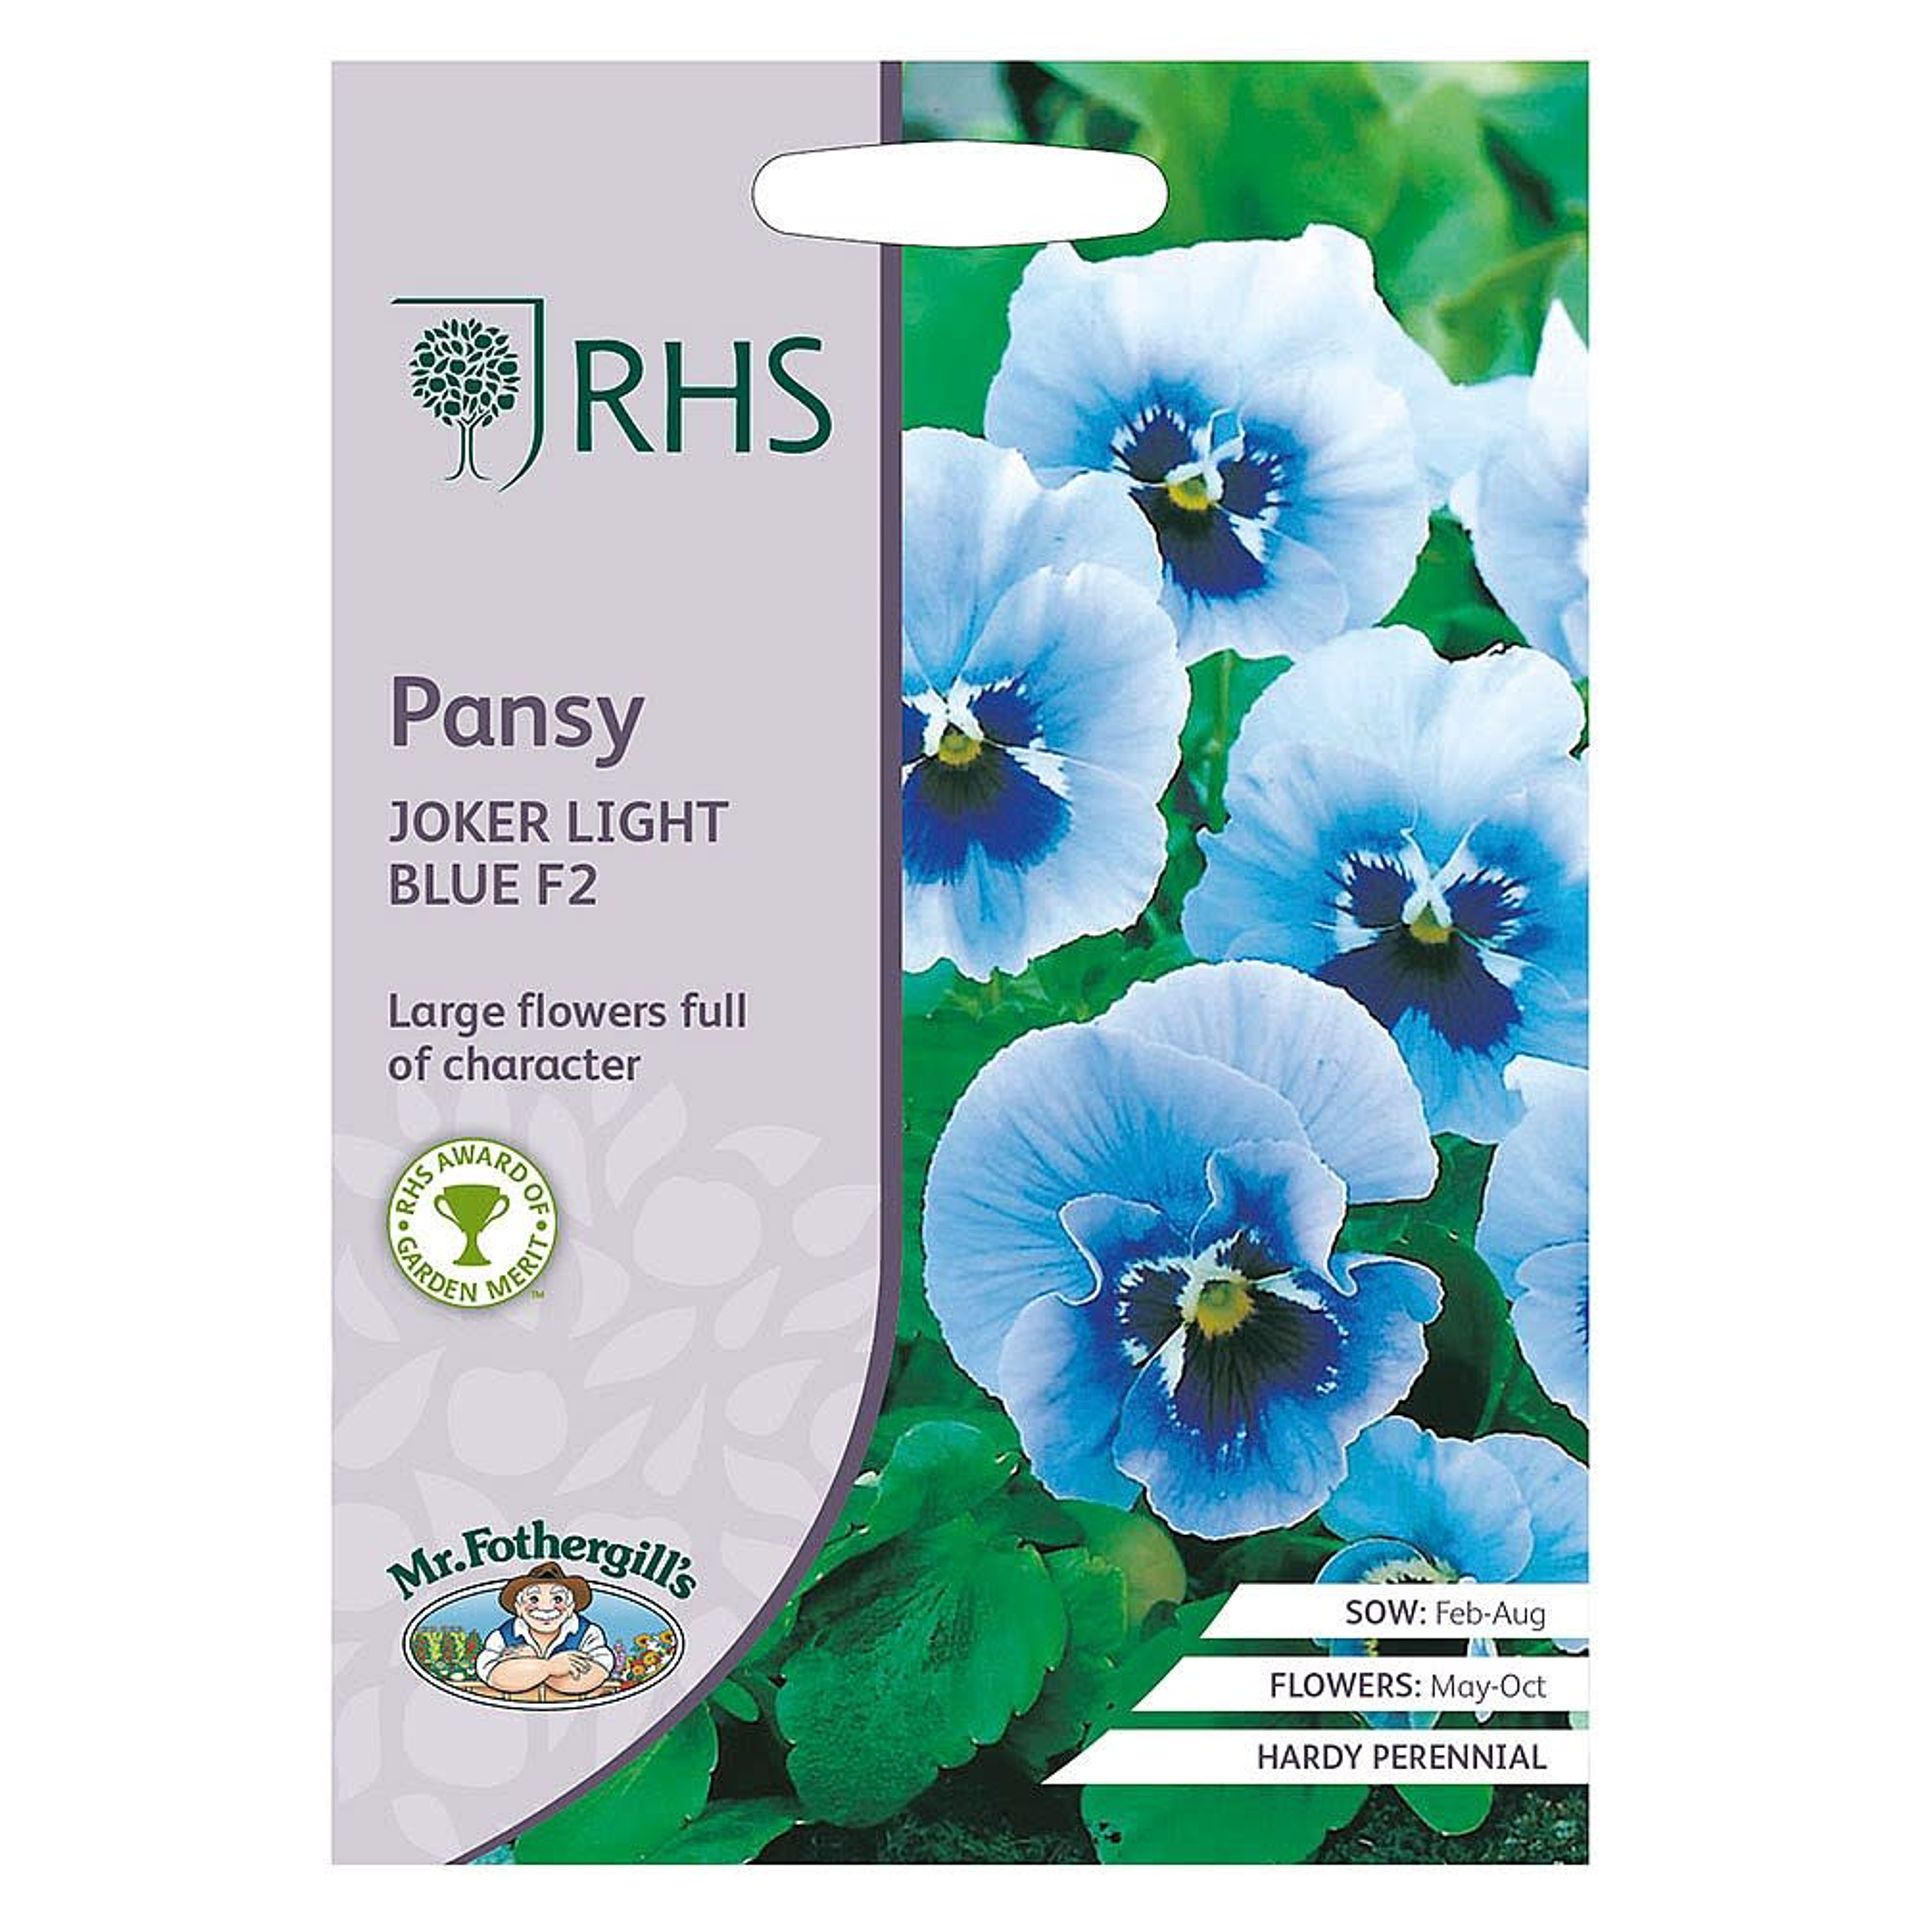 Mr Fothergill's RHS Pansy 'Joker Light Blue' F2 Seeds